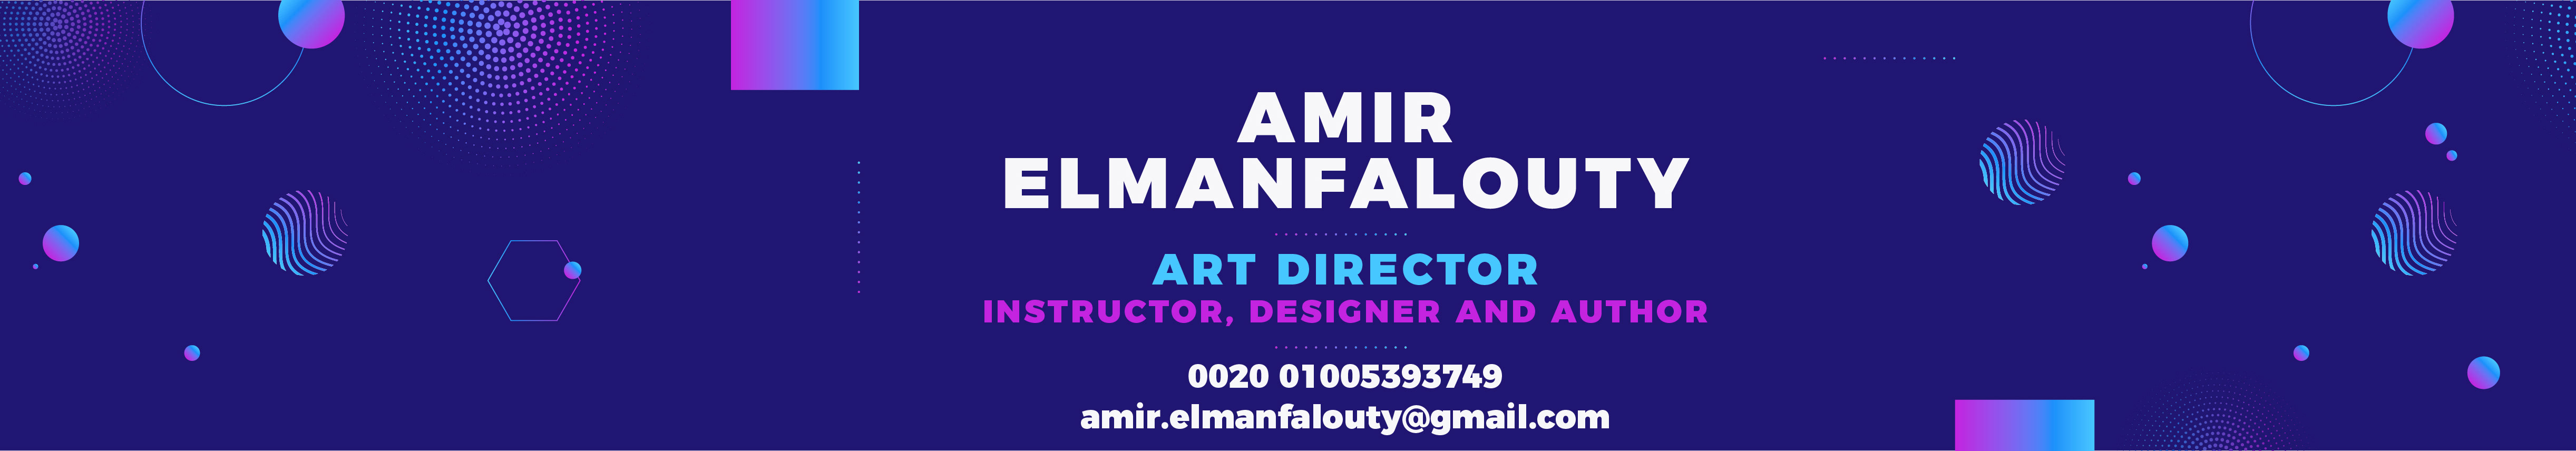 Amir Elmanfalouty's profile banner